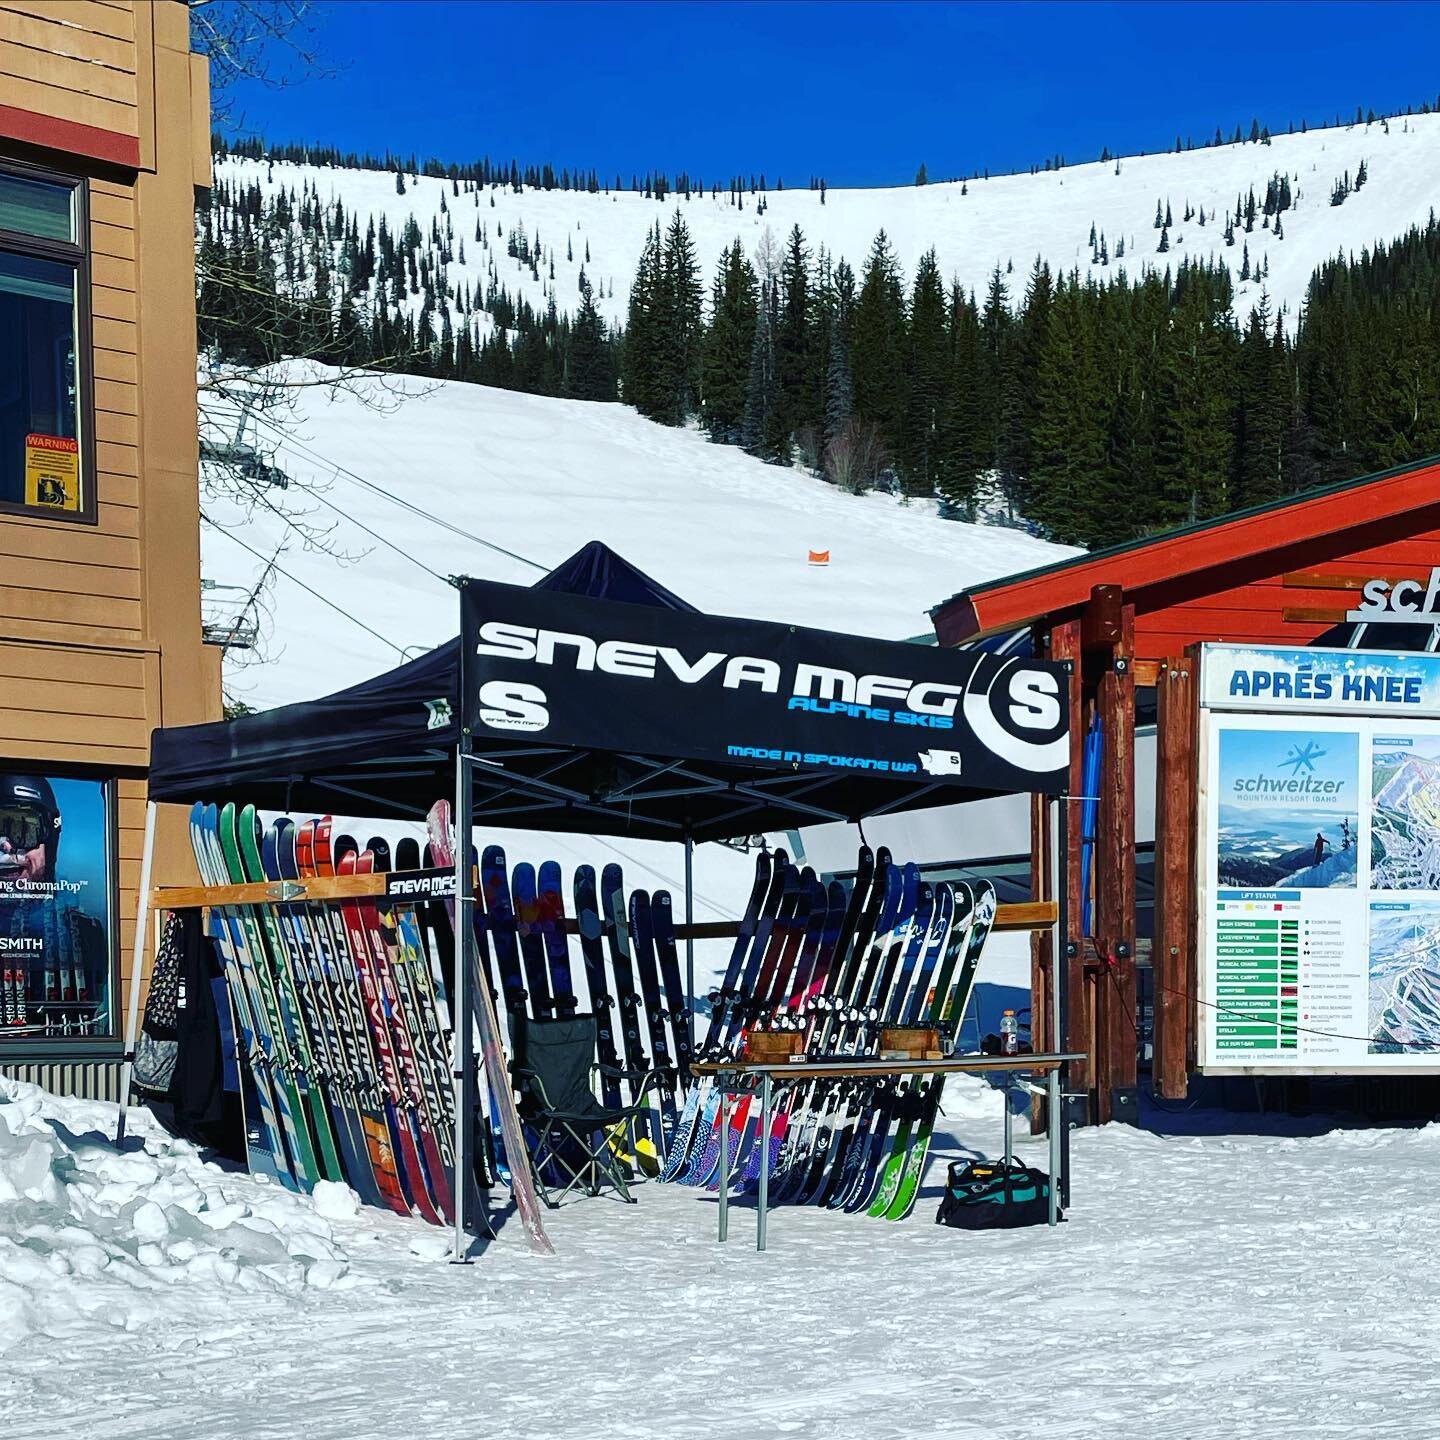 We are @schweitzer_mountain today come demo some skis made in Spokane #snevamfg #ski #pnw